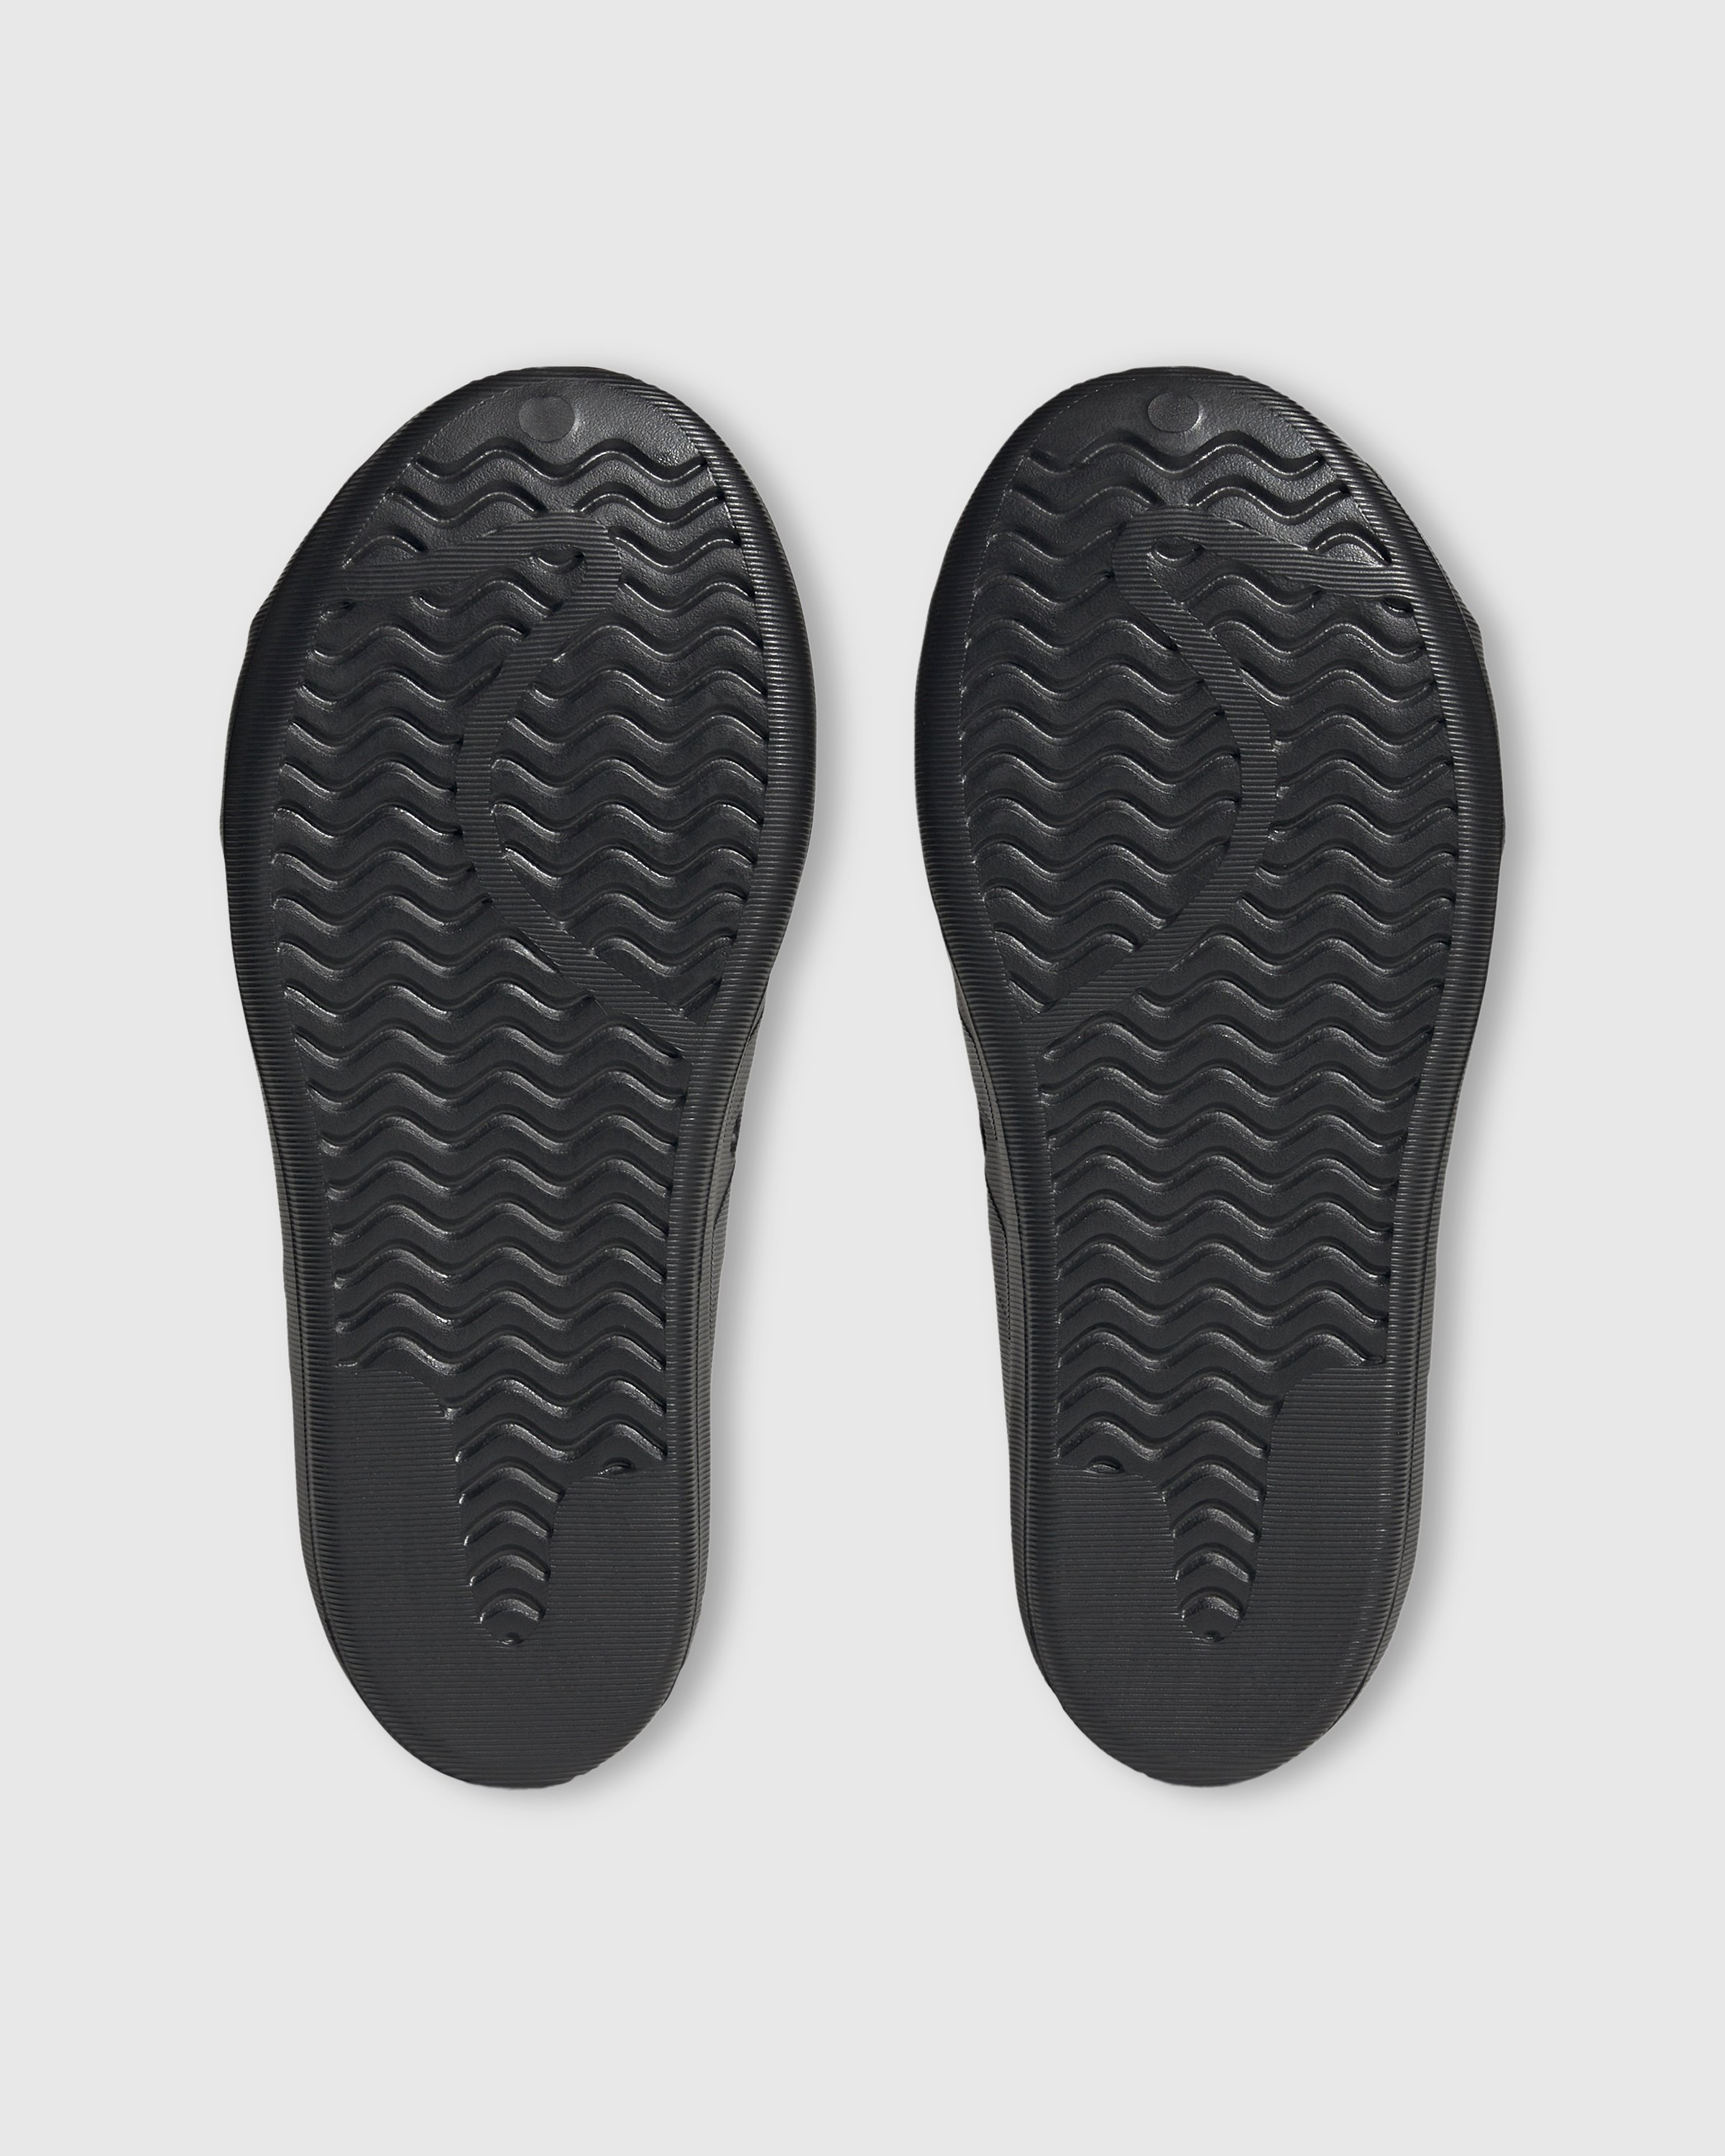 Adidas - Adifom Superstar Black Carbon - Footwear - Black - Image 5